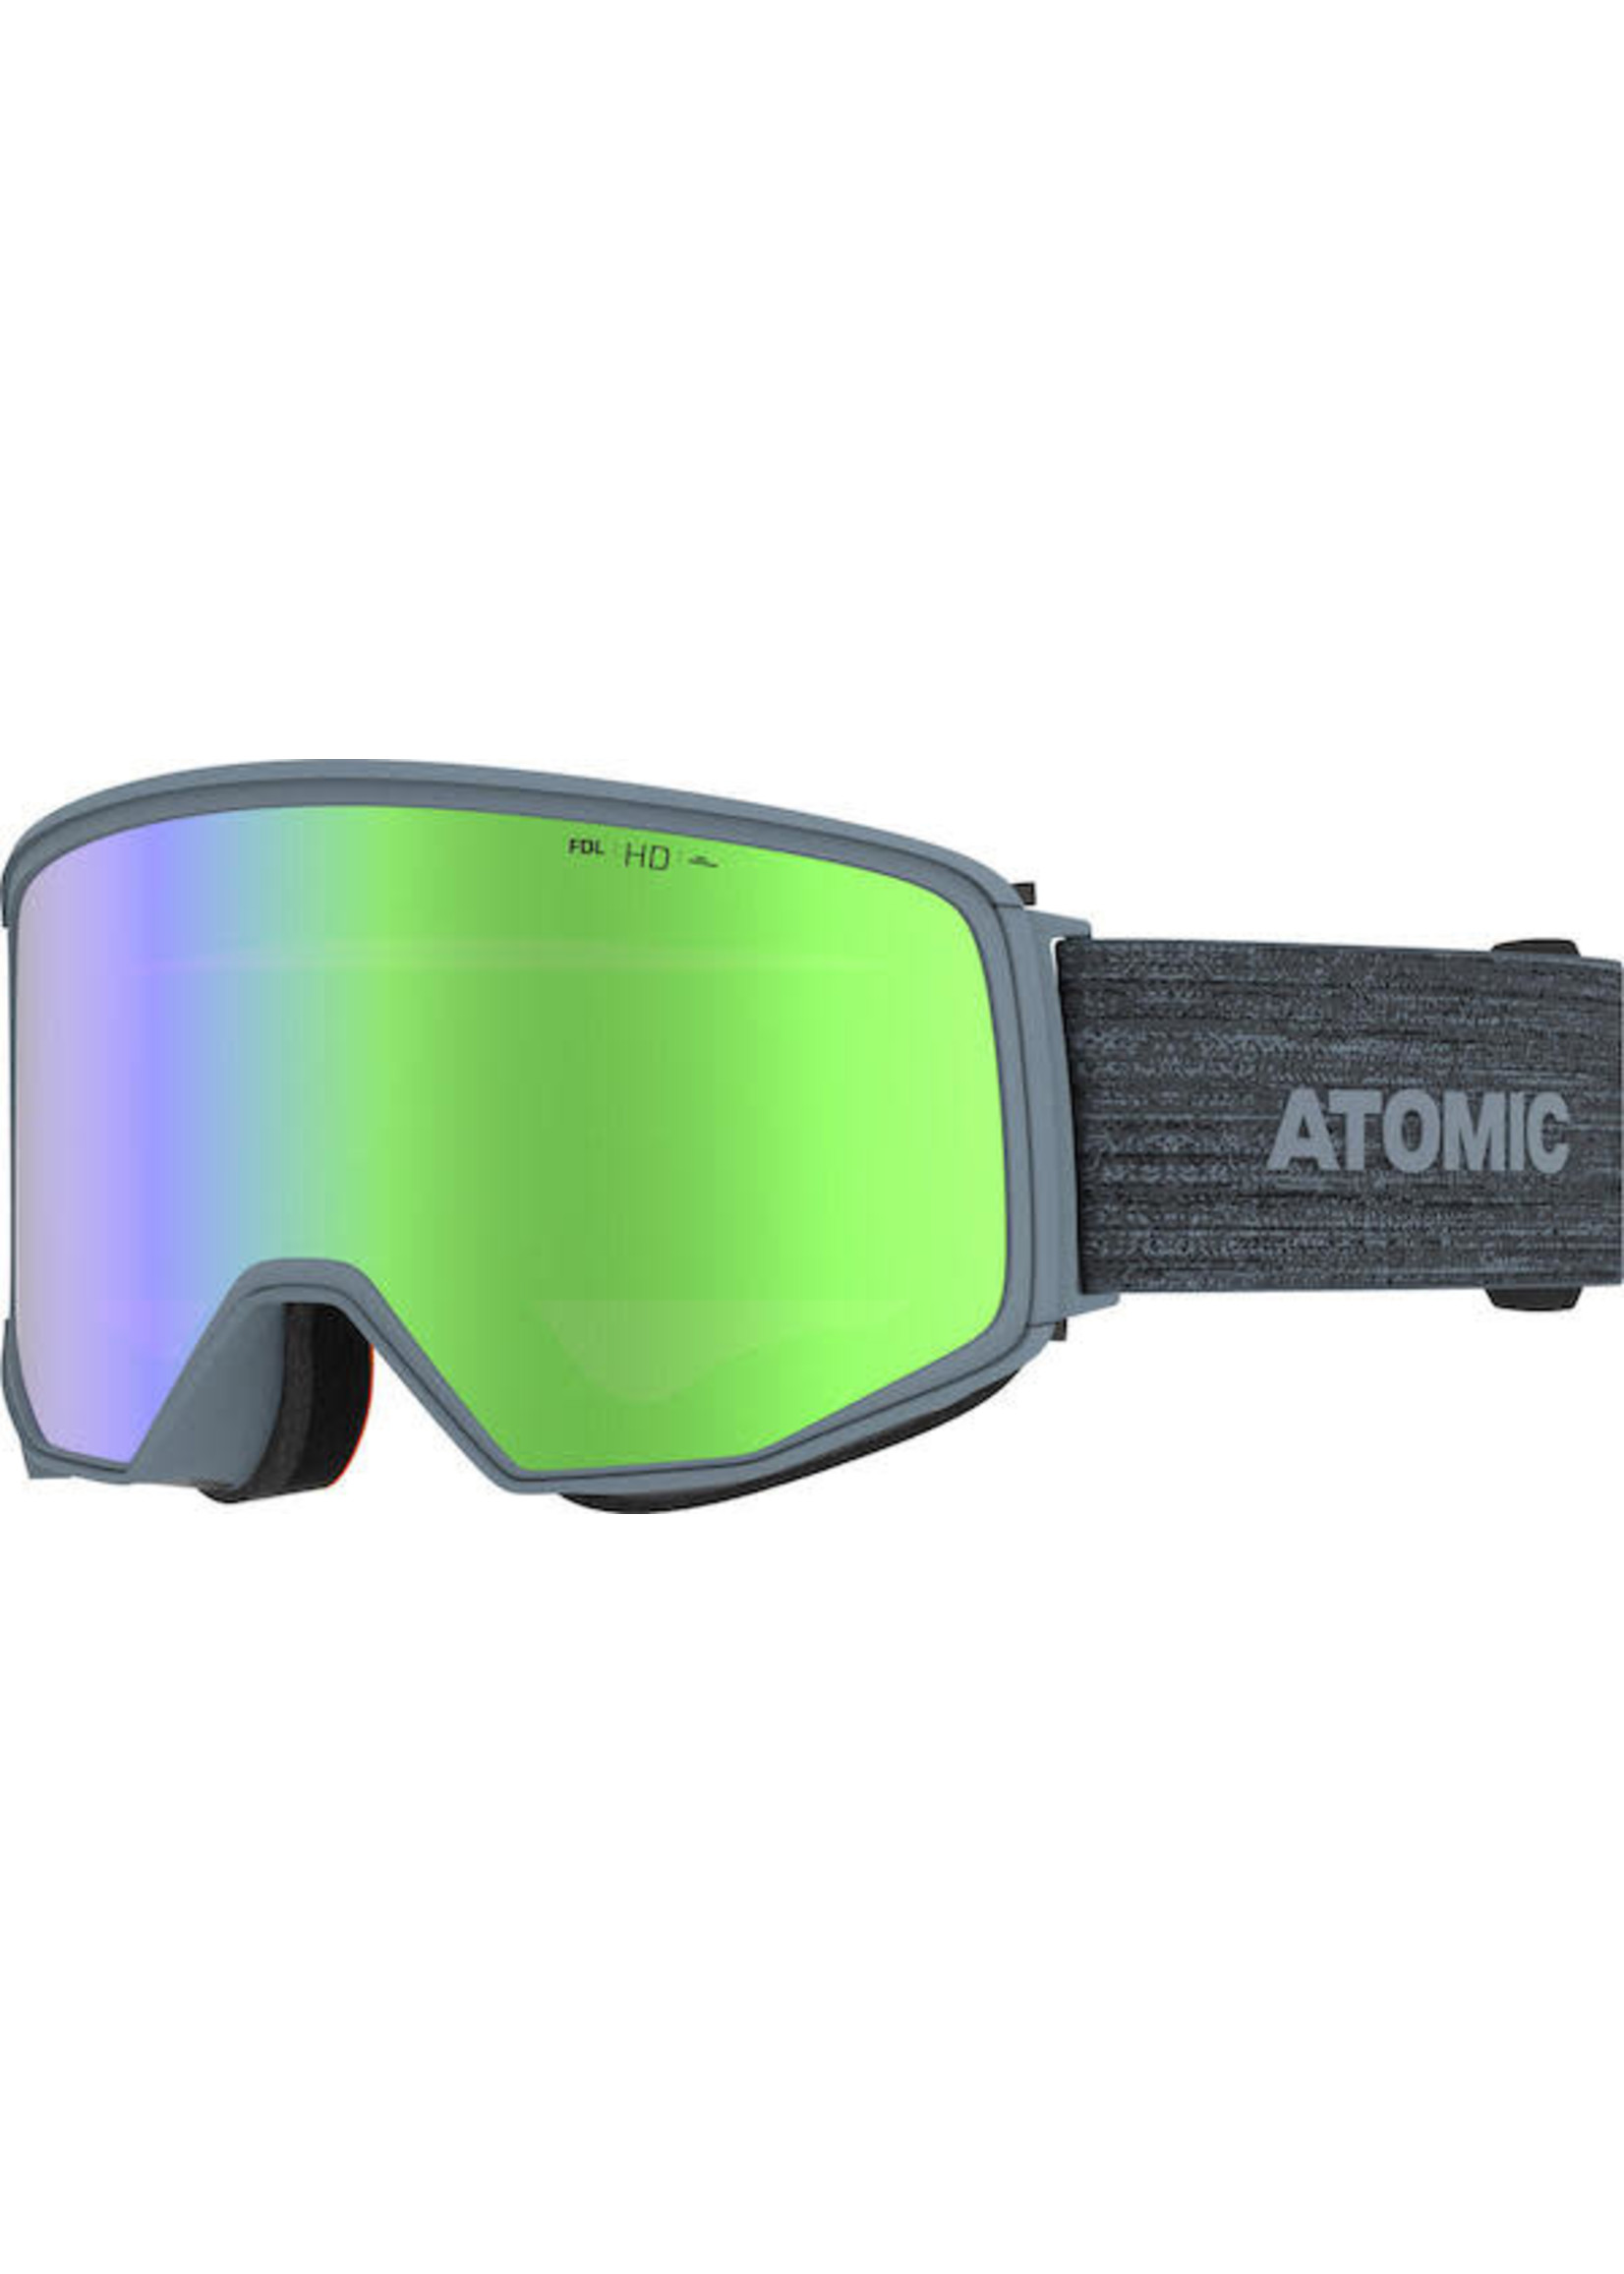 Atomic Alpine Goggle FOUR Q HD